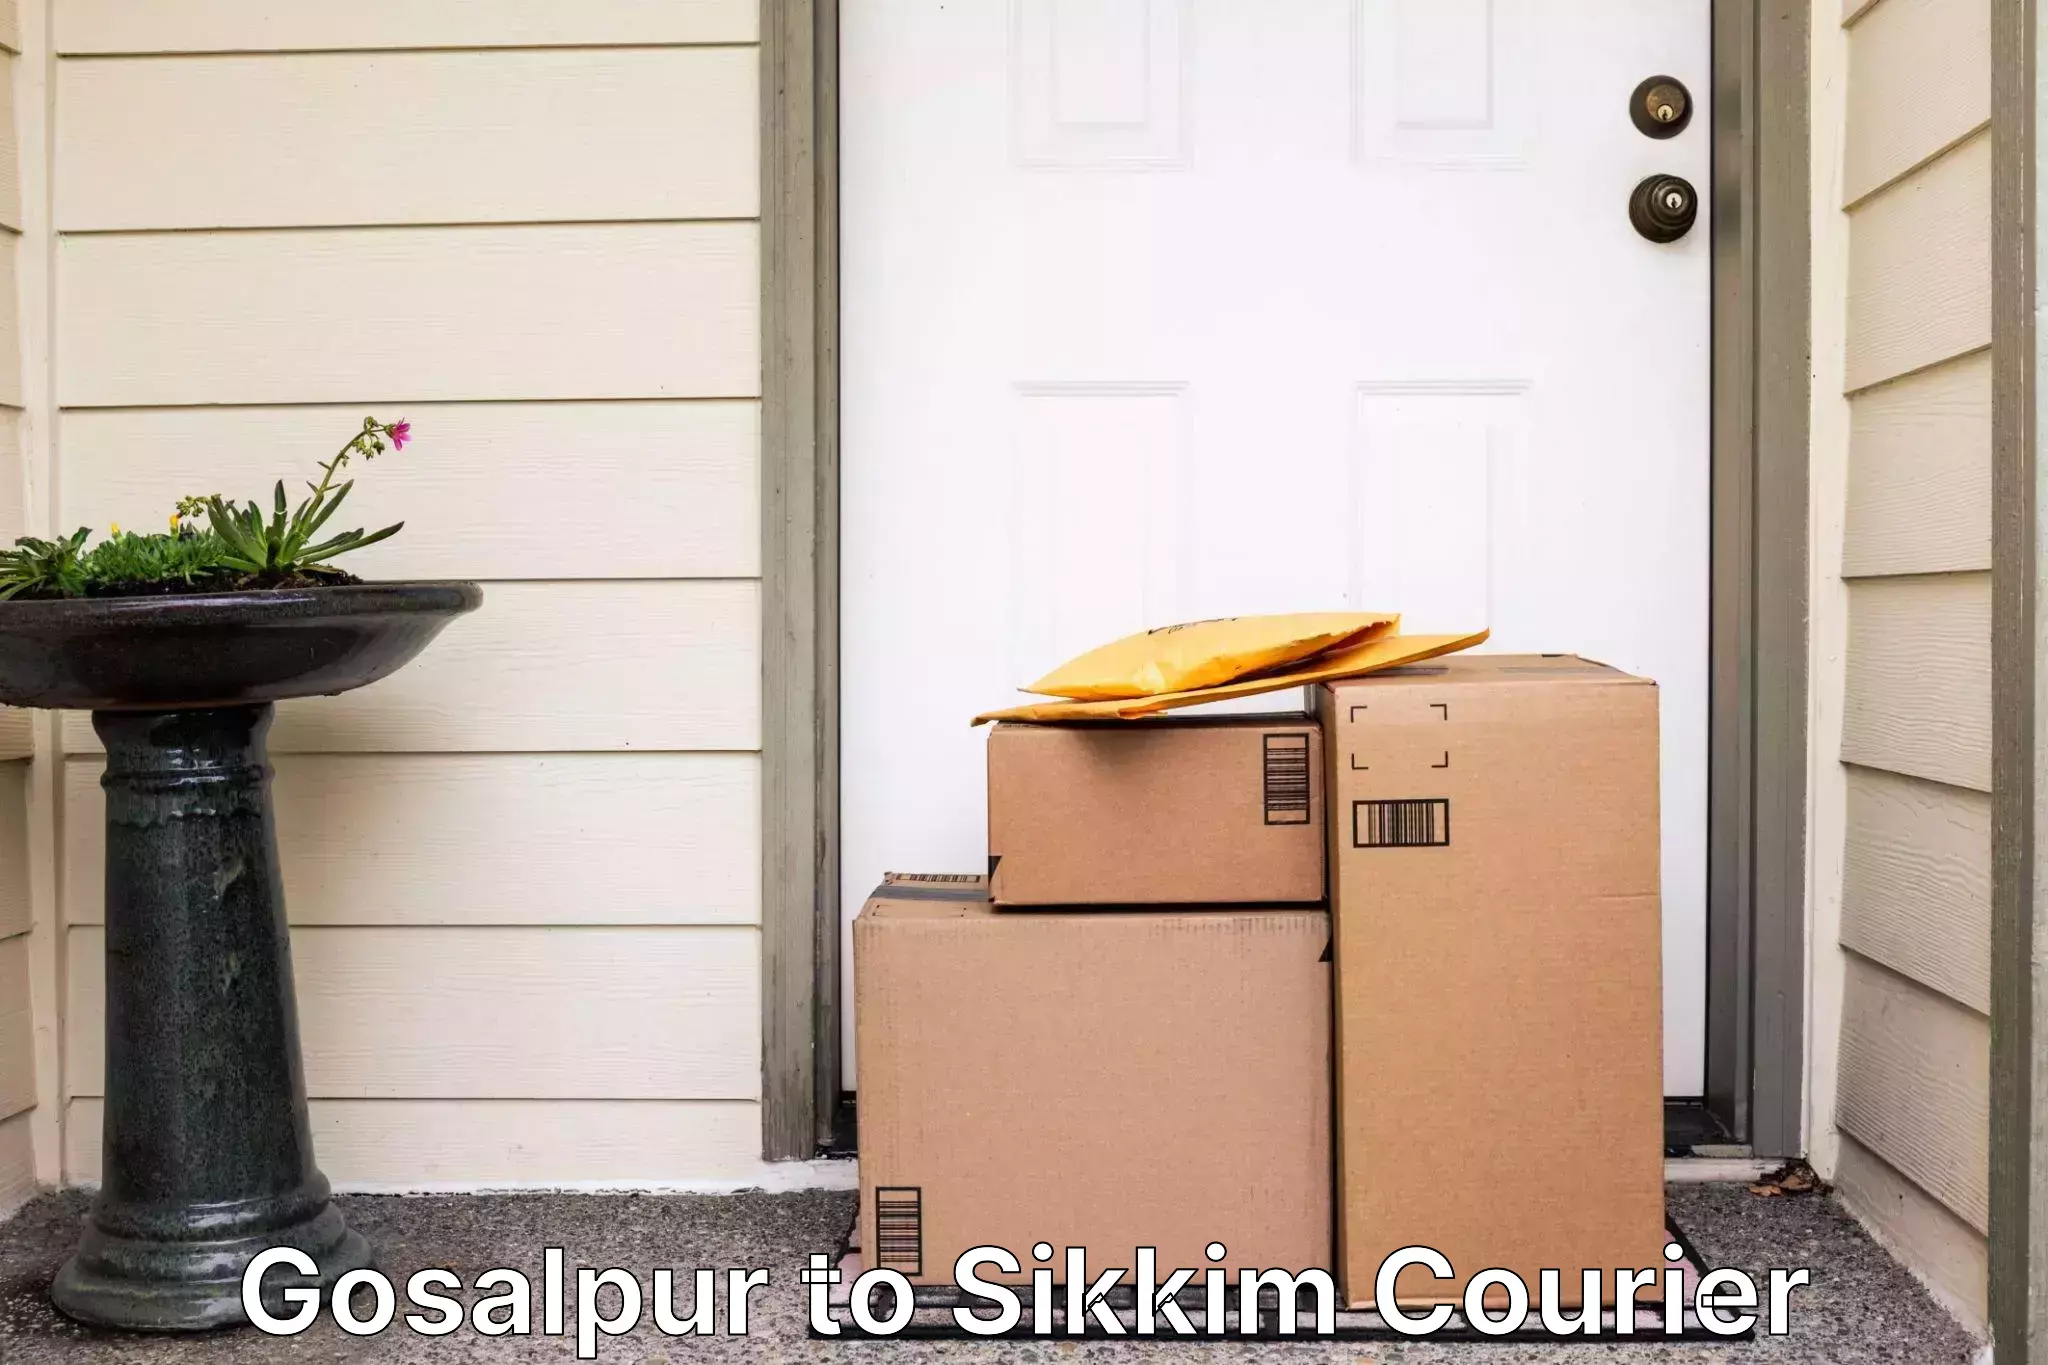 Affordable parcel service Gosalpur to Sikkim